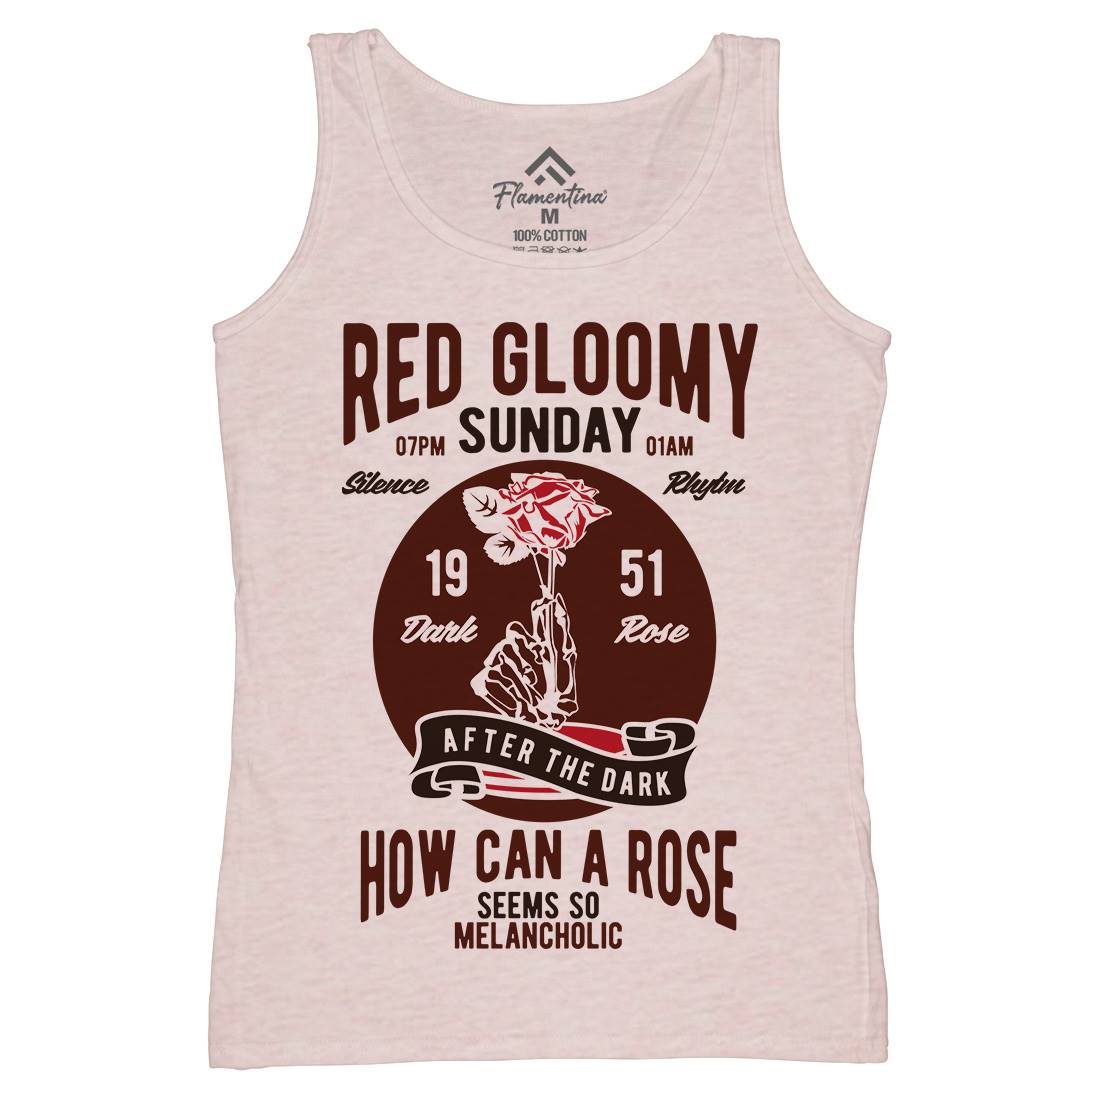 Red Gloomy Sunday Womens Organic Tank Top Vest Retro B437